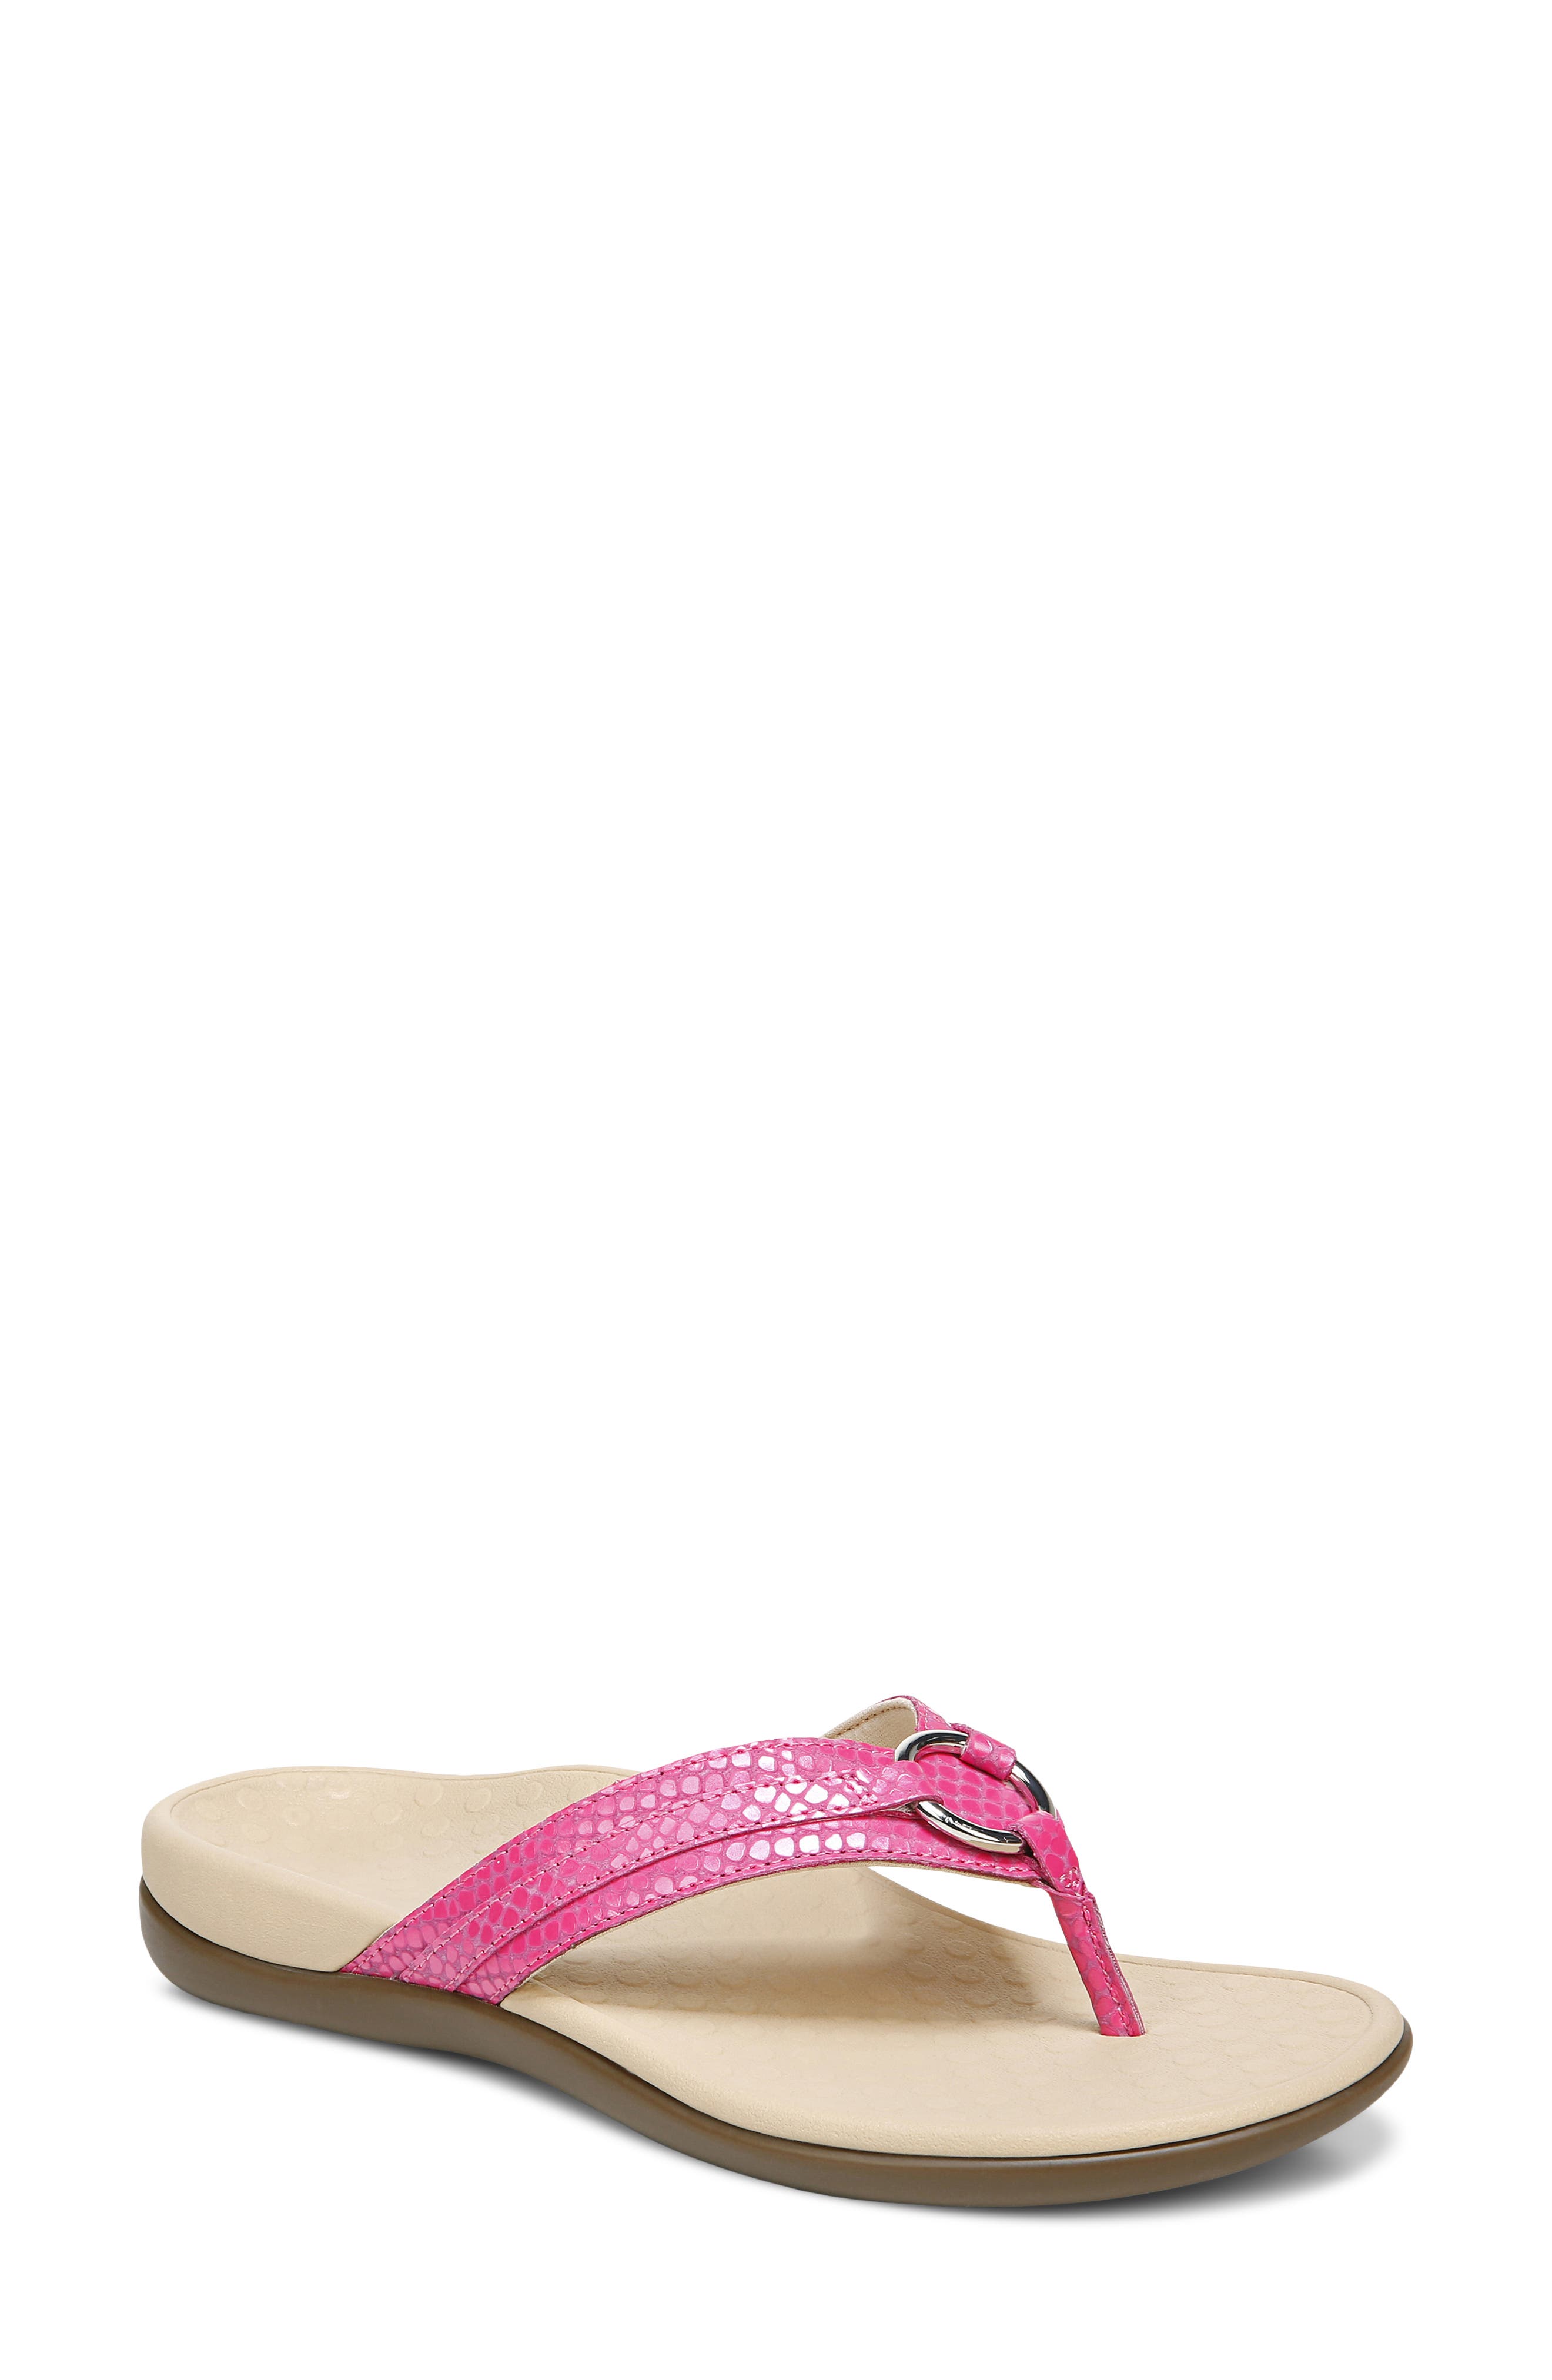 pink vionic sandals